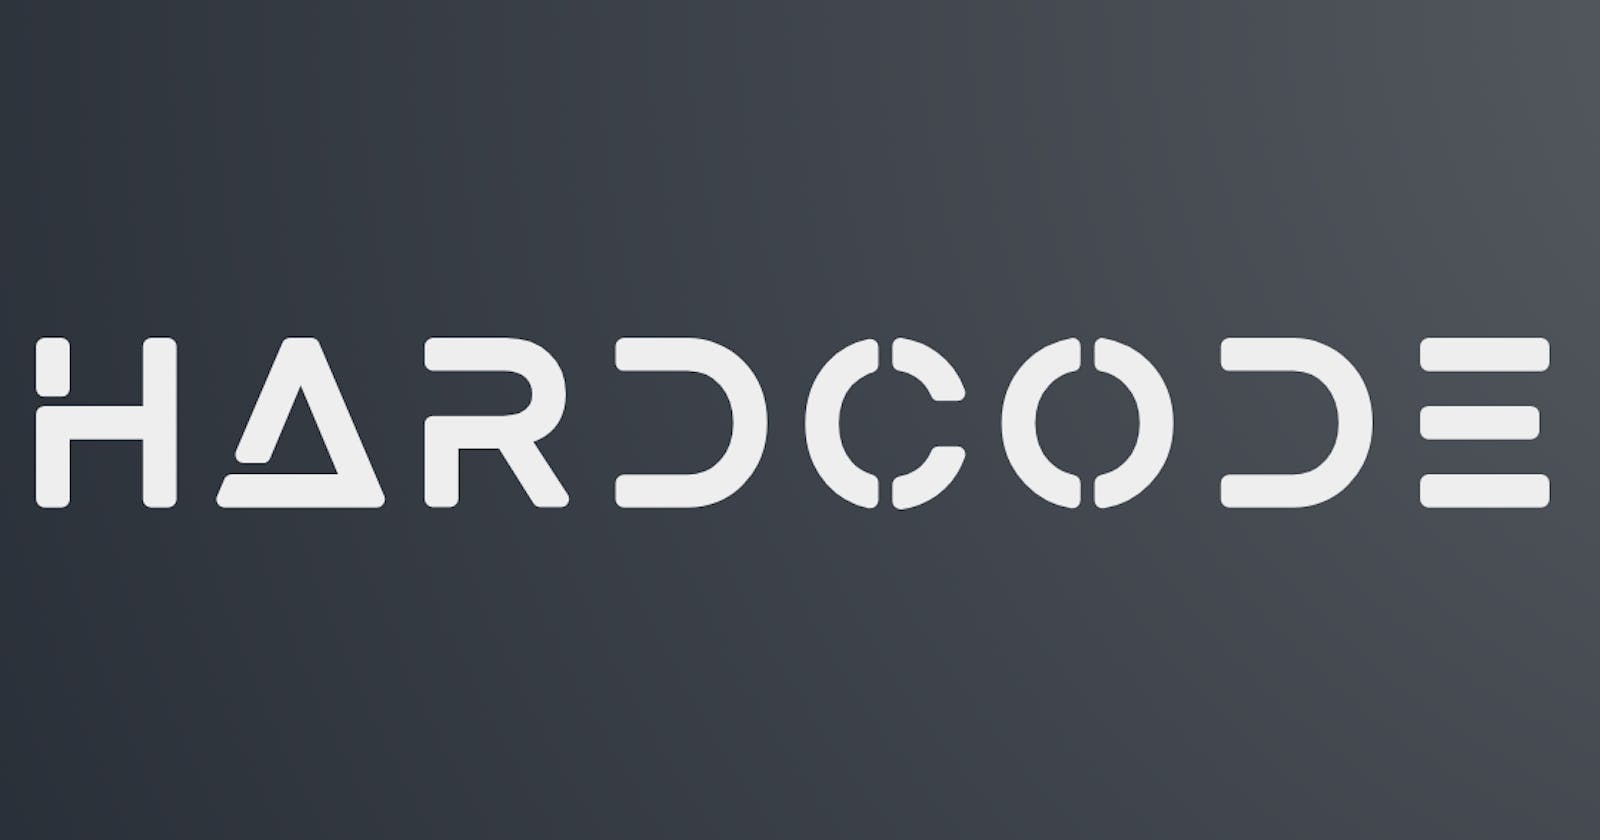 Hardcode | README.md